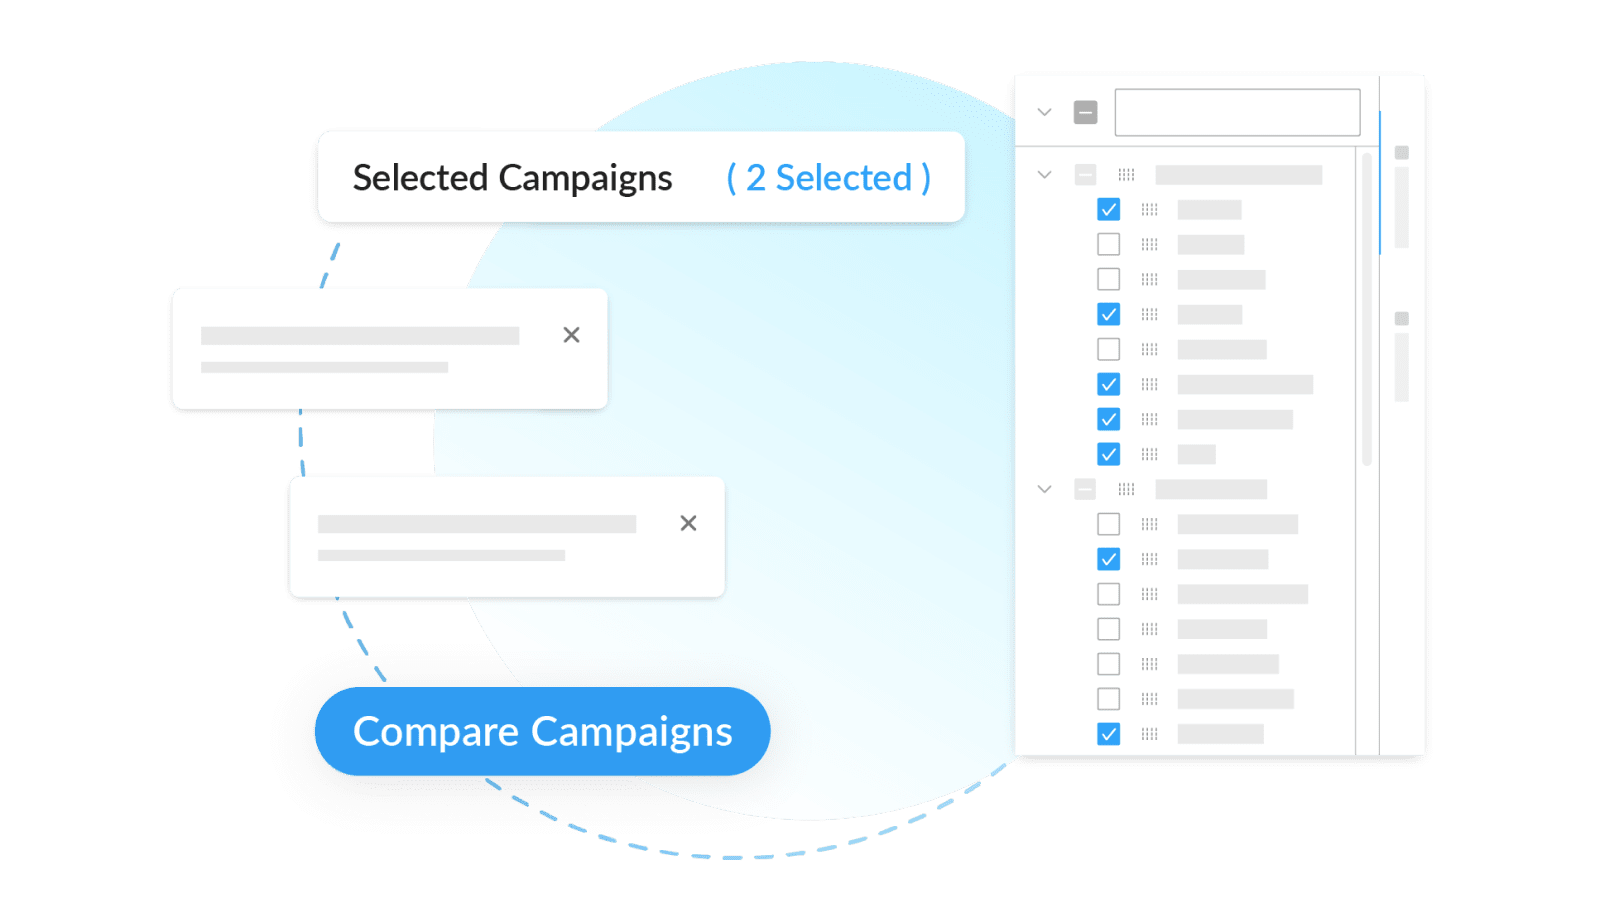 ContactMonkey's campaign comparison tool